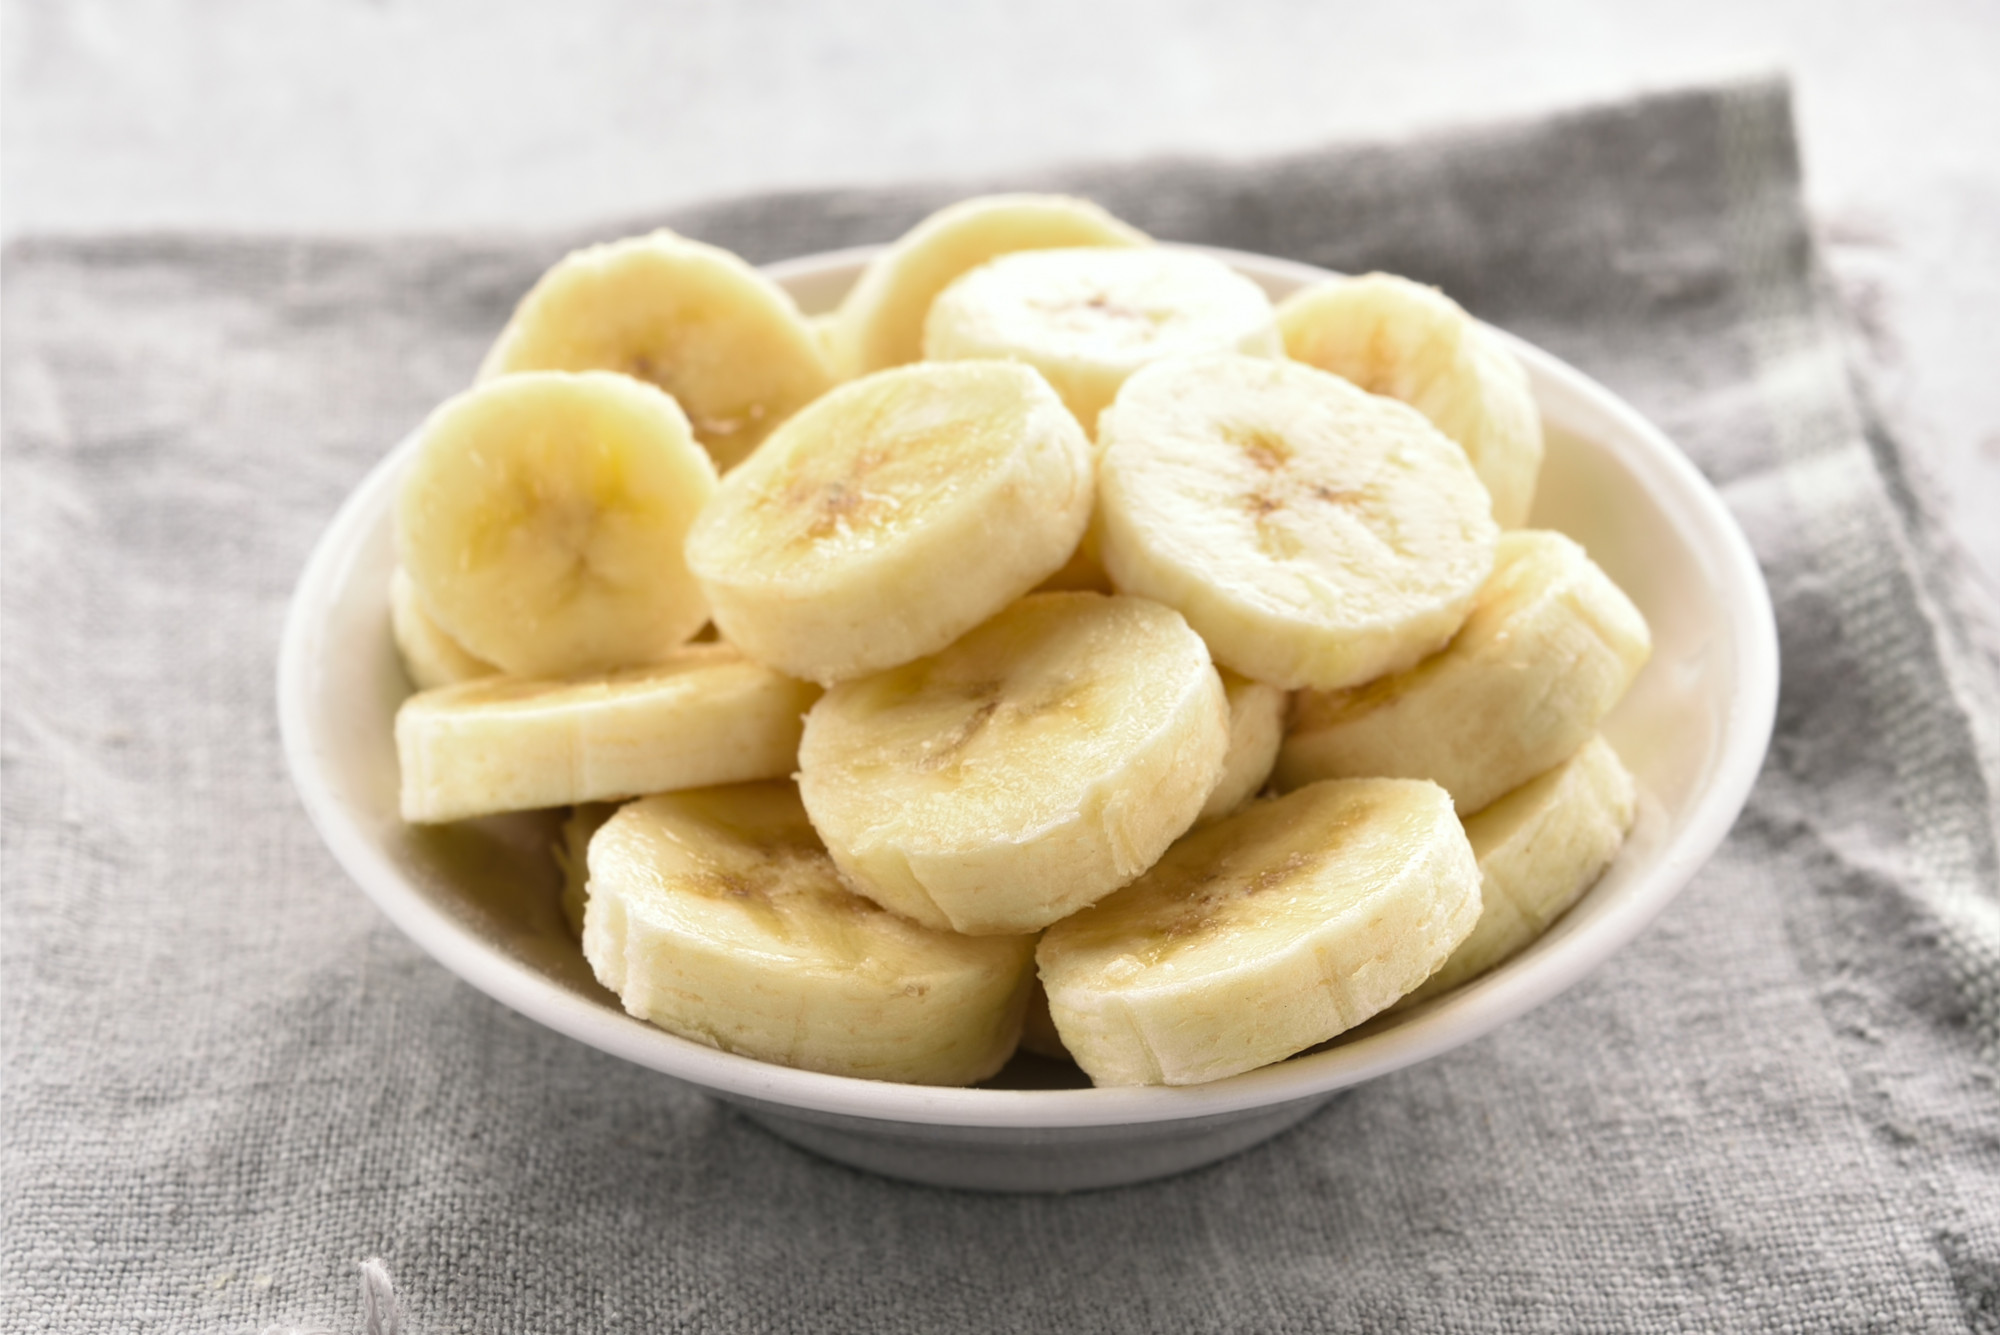 Banana Nanica